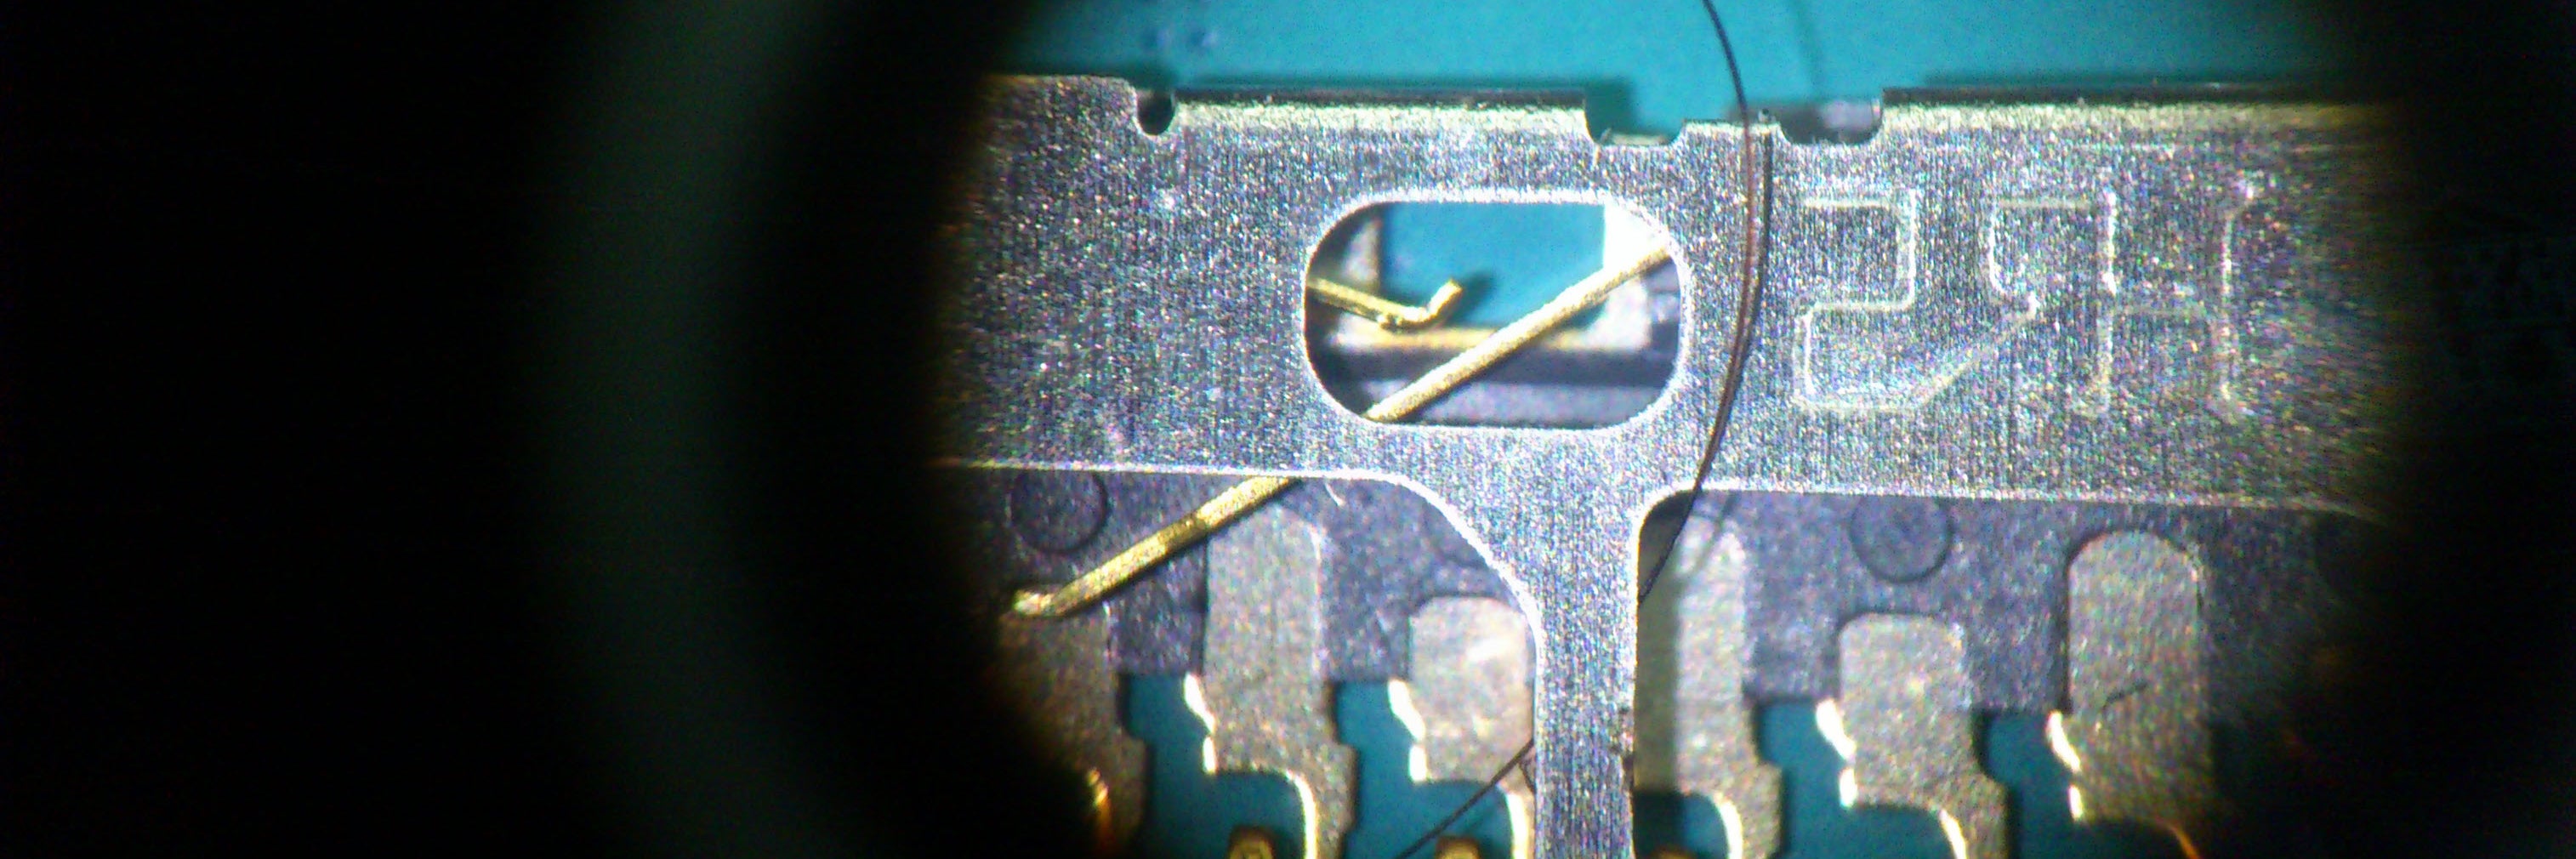 Microelectronics: Equipment Breakdown